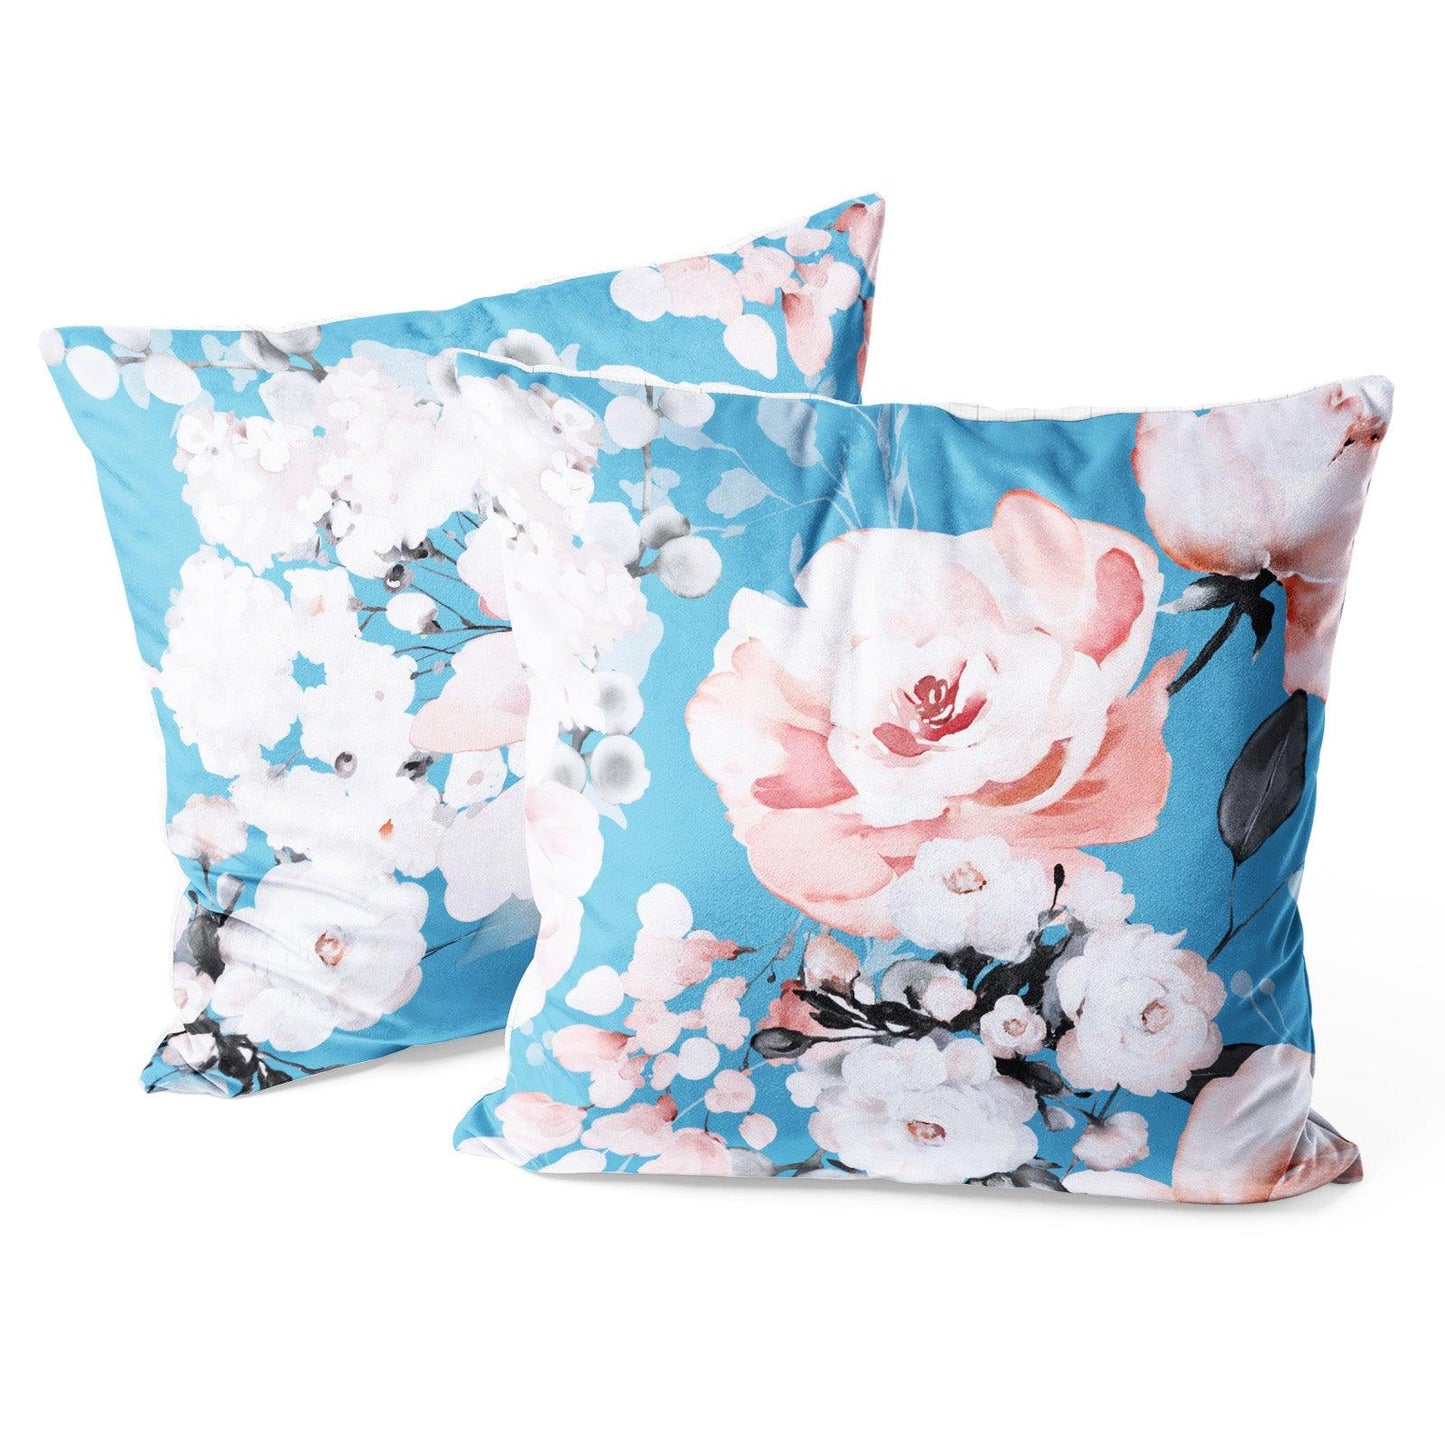 Modern Flower Throw Pillow Covers Pack of 2 18x18 Inch (White Peony) - Berkin Arts